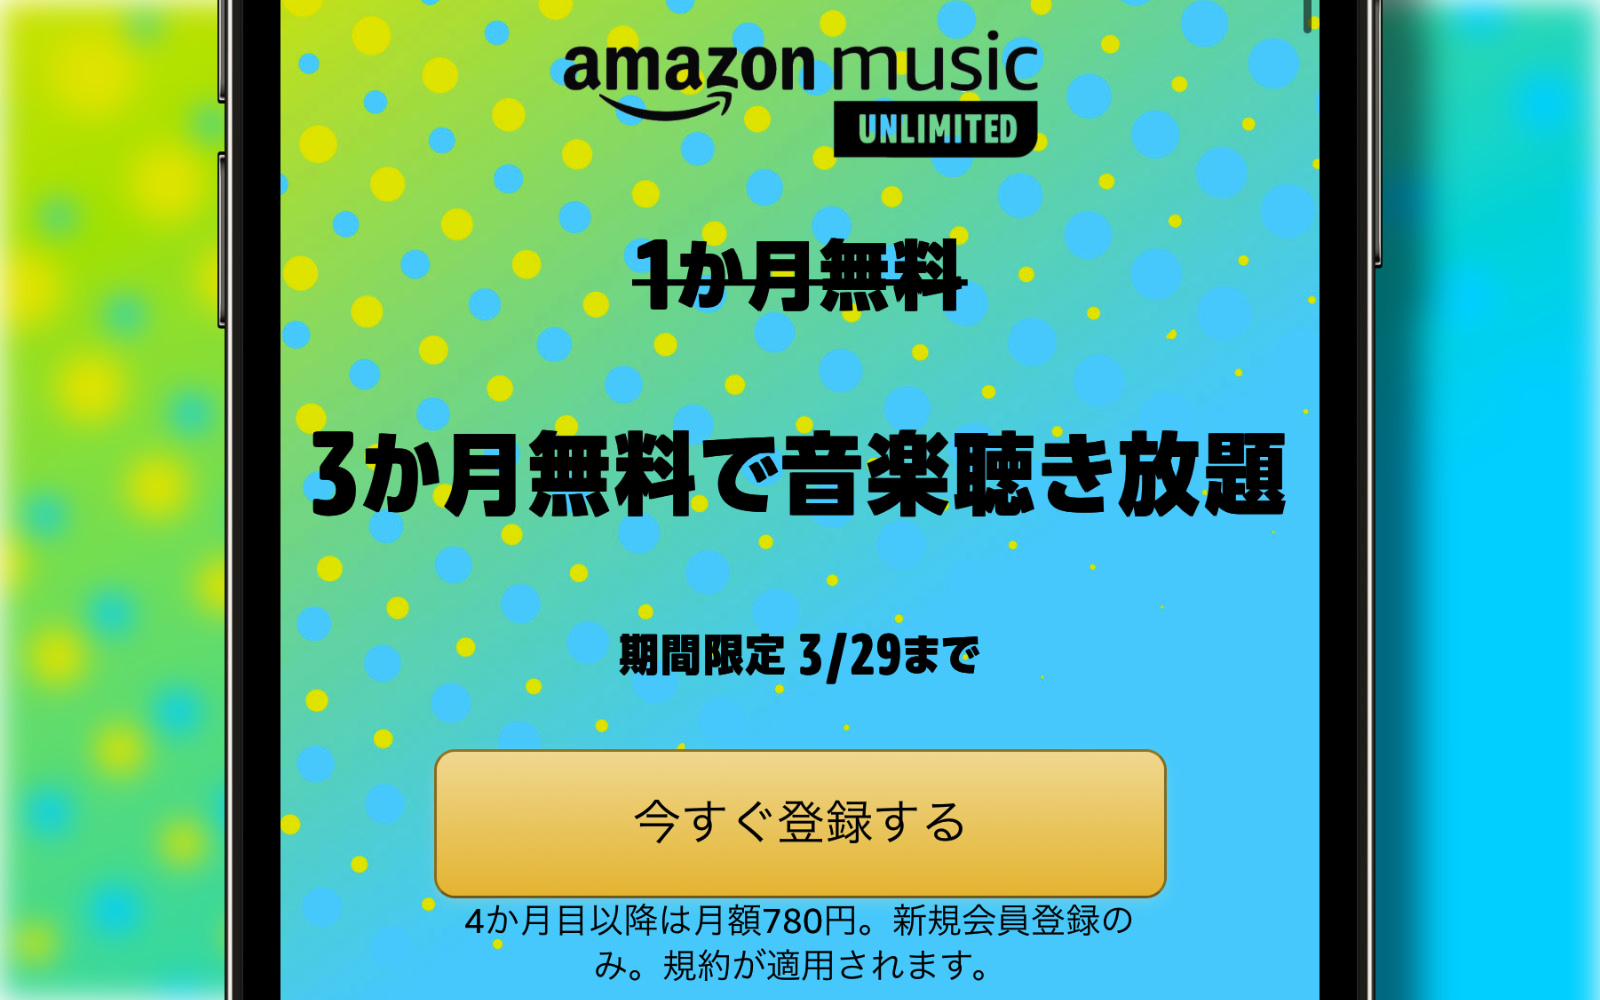 Amazon-Music-3months-free.jpg